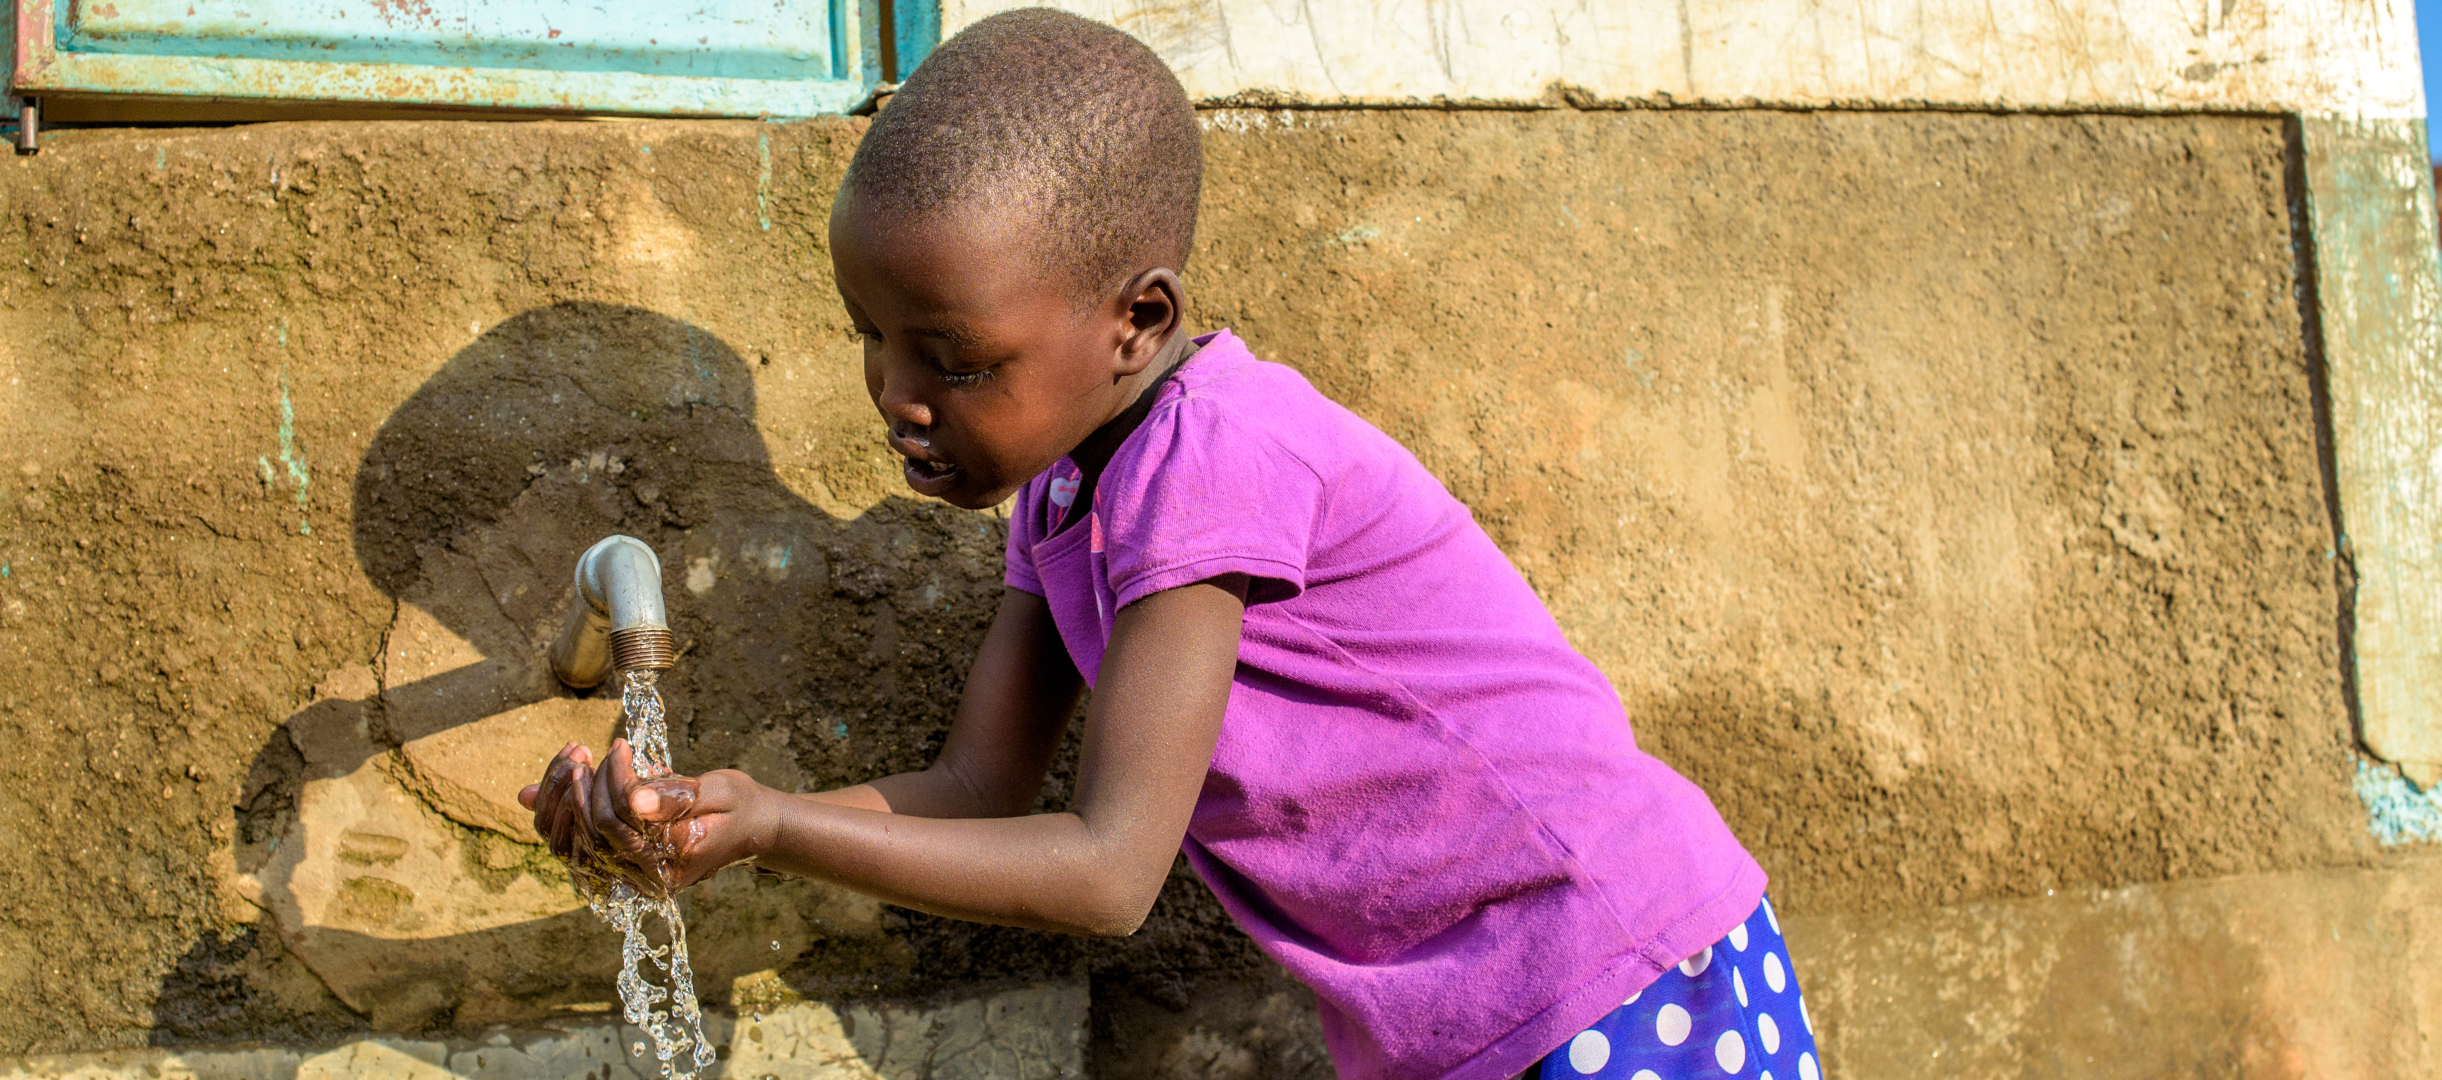 Patenkind Kamama aus Kenia trinkt sauberes Wasser